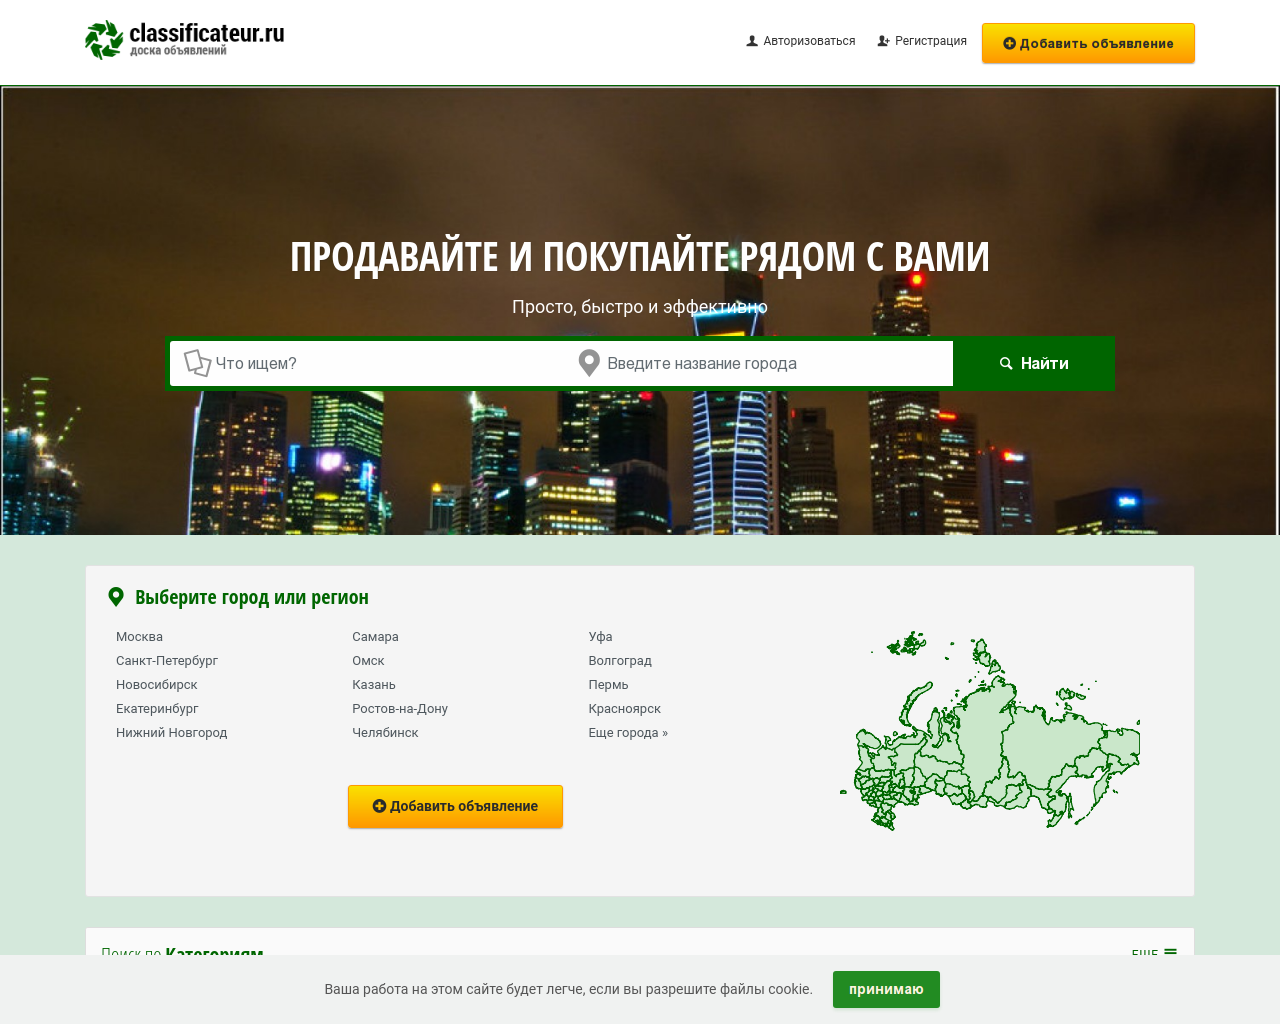 Изображение сайта classificateur.ru в разрешении 1280x1024